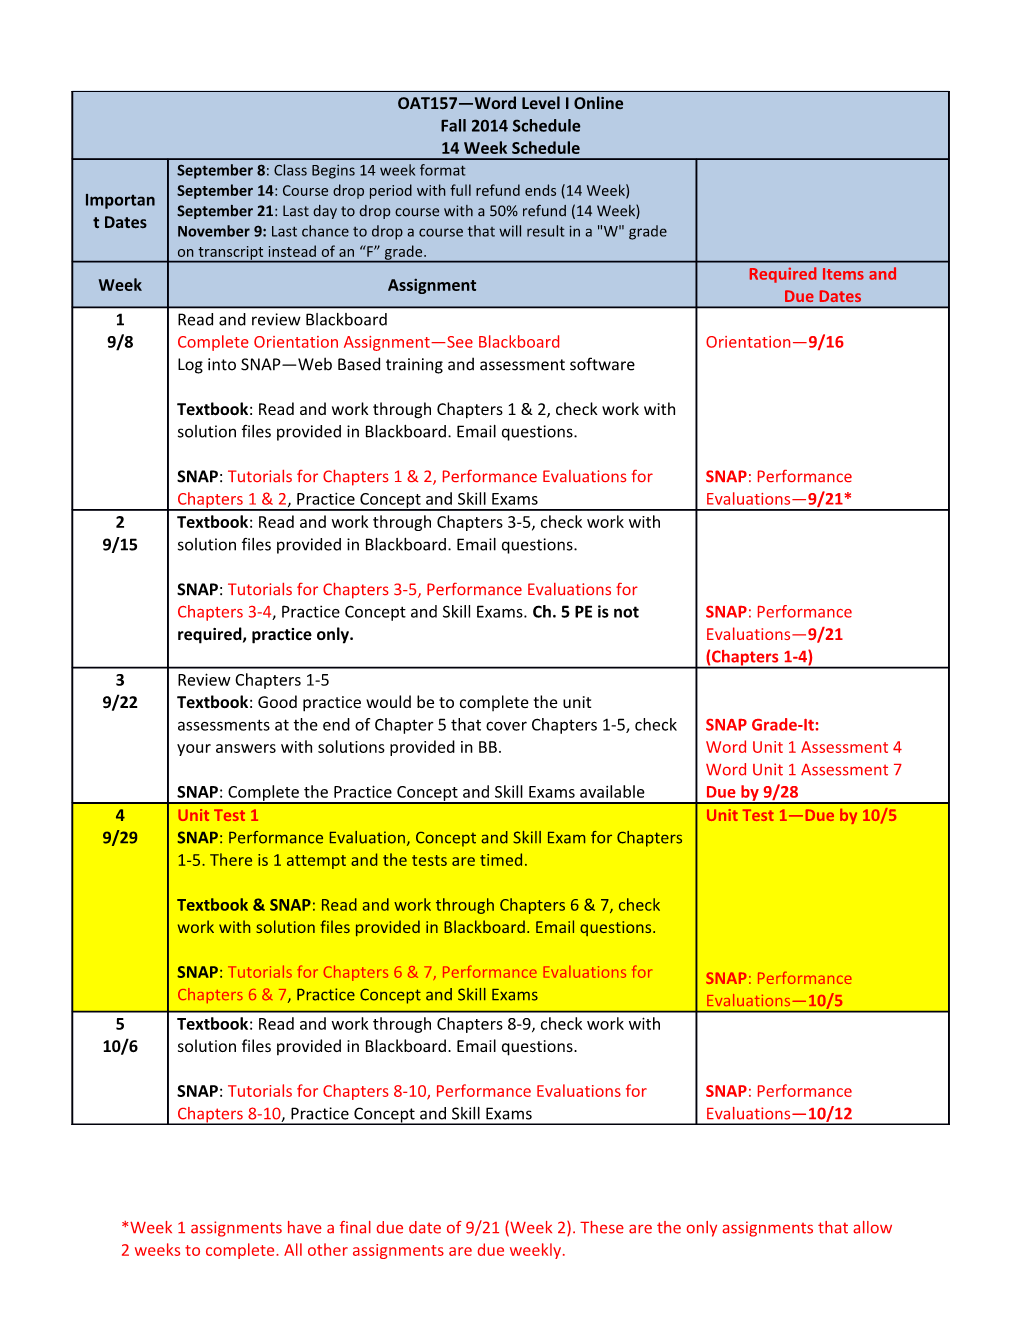 OAT157 Word Level I Online Fall 2014 Schedule 14 Week Schedule